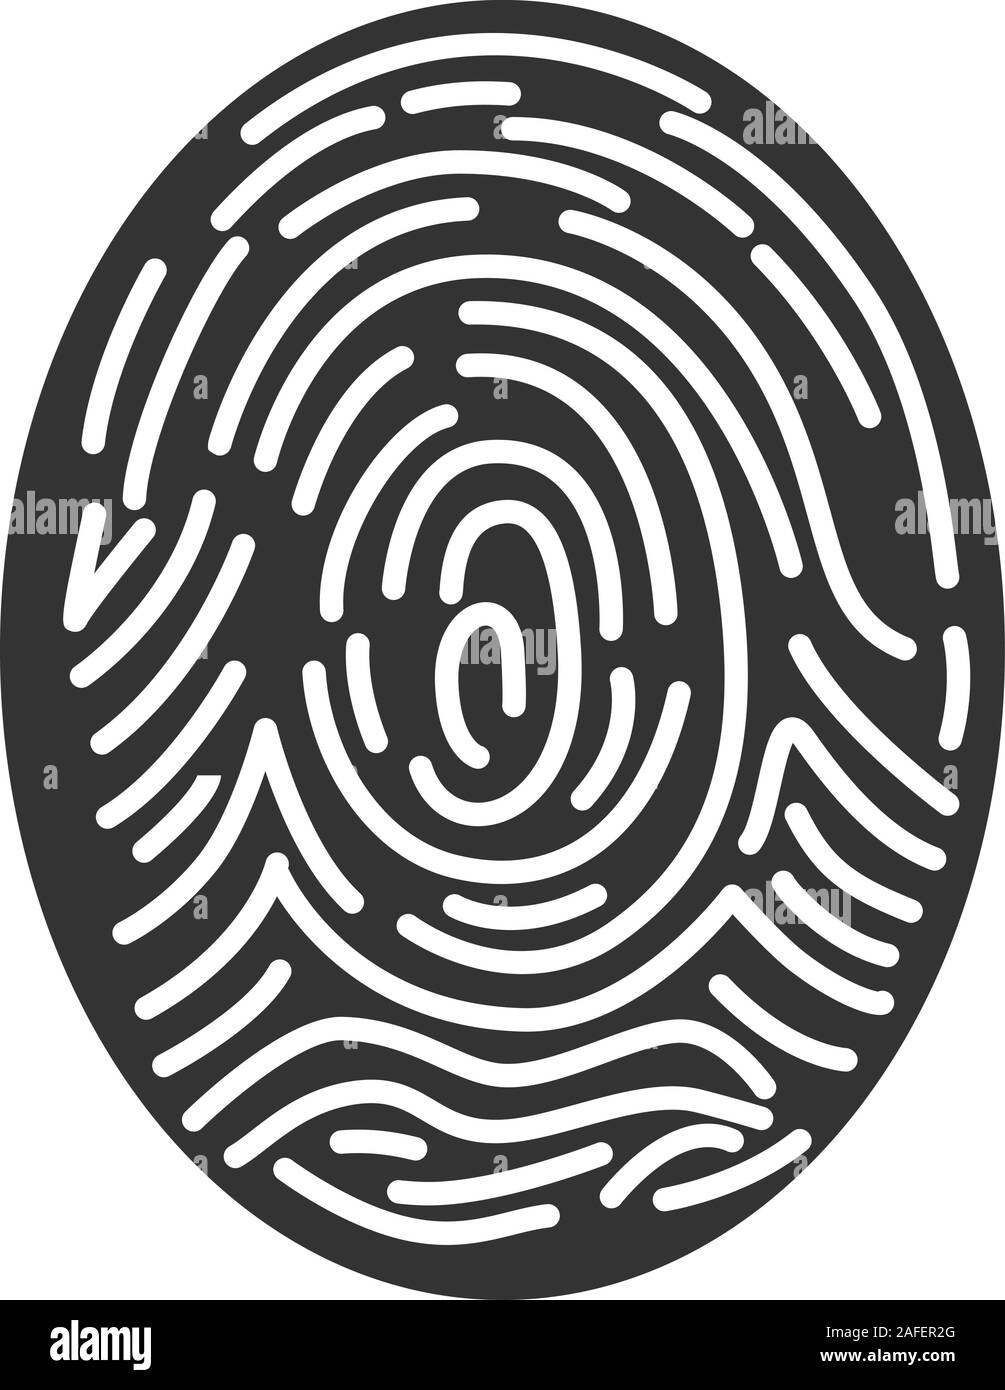 Fingerprint glyph icon. Silhouette symbol. Finger identification. Negative space. Vector isolated illustration Stock Vector